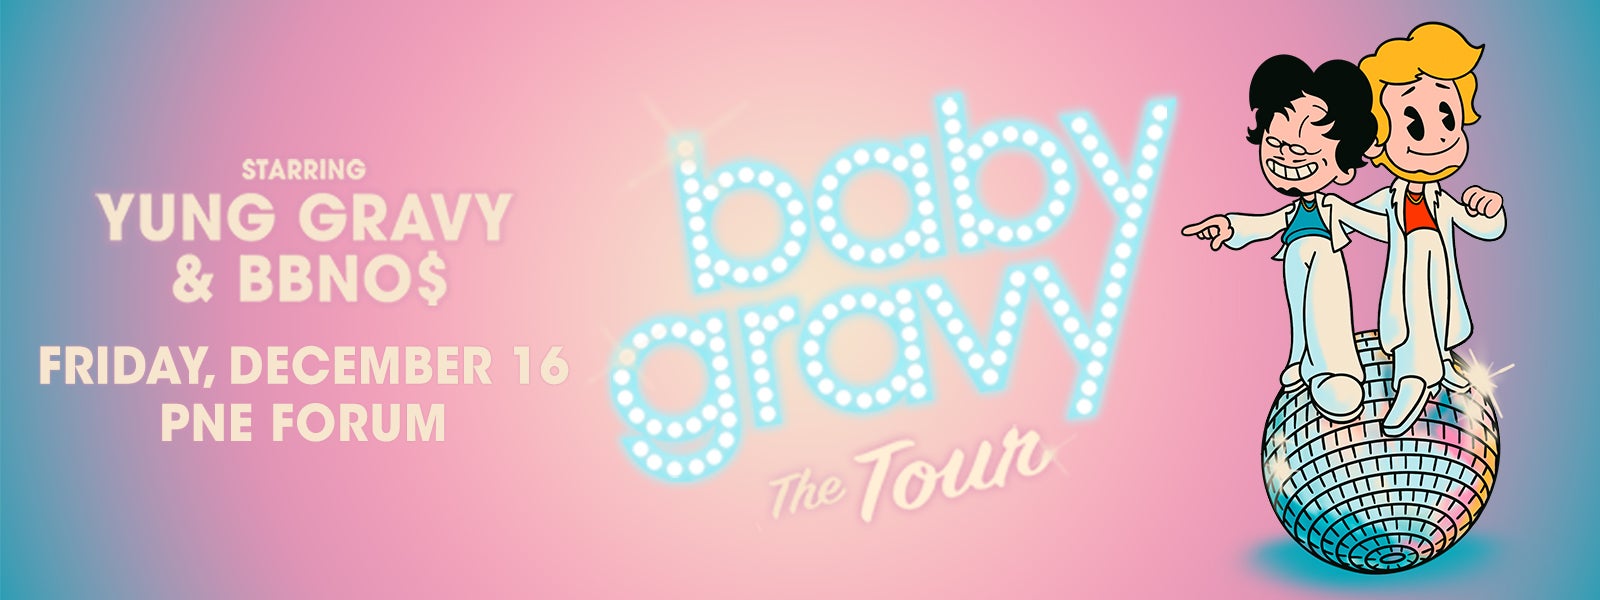 Yung Gravy & bbno$: Baby Gravy, The Tour 